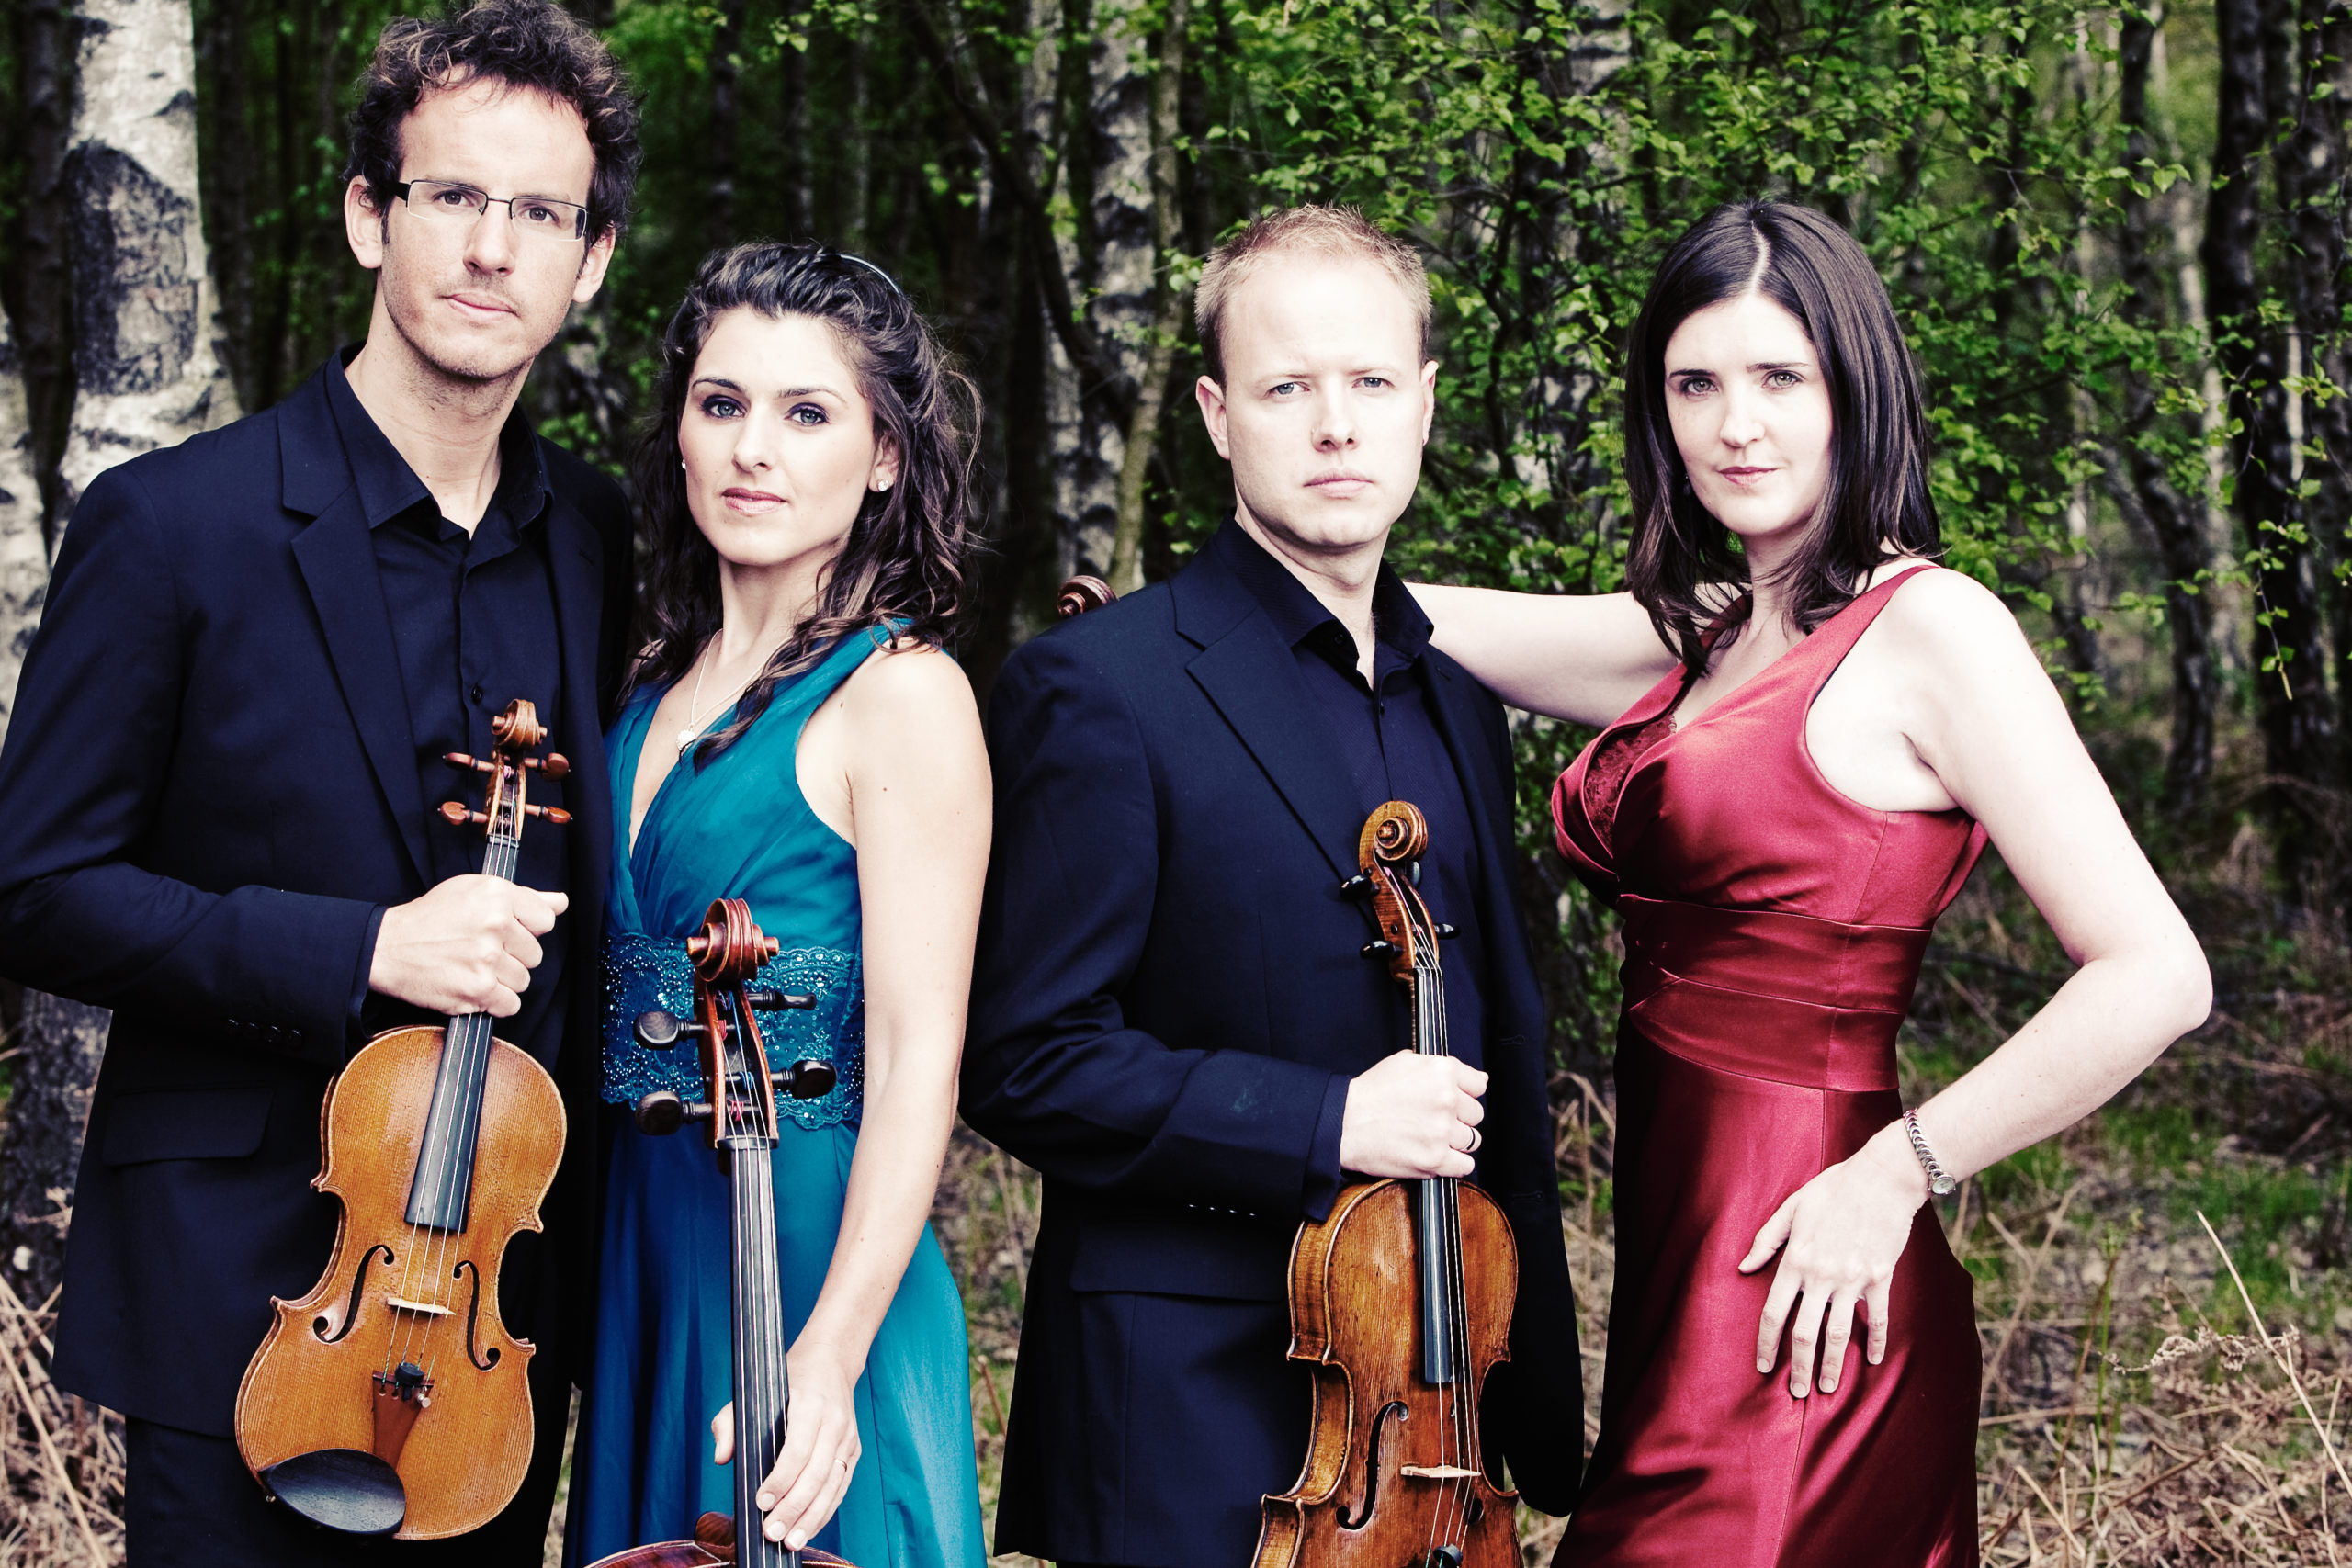 All four musicians of the Carducci String Quartet